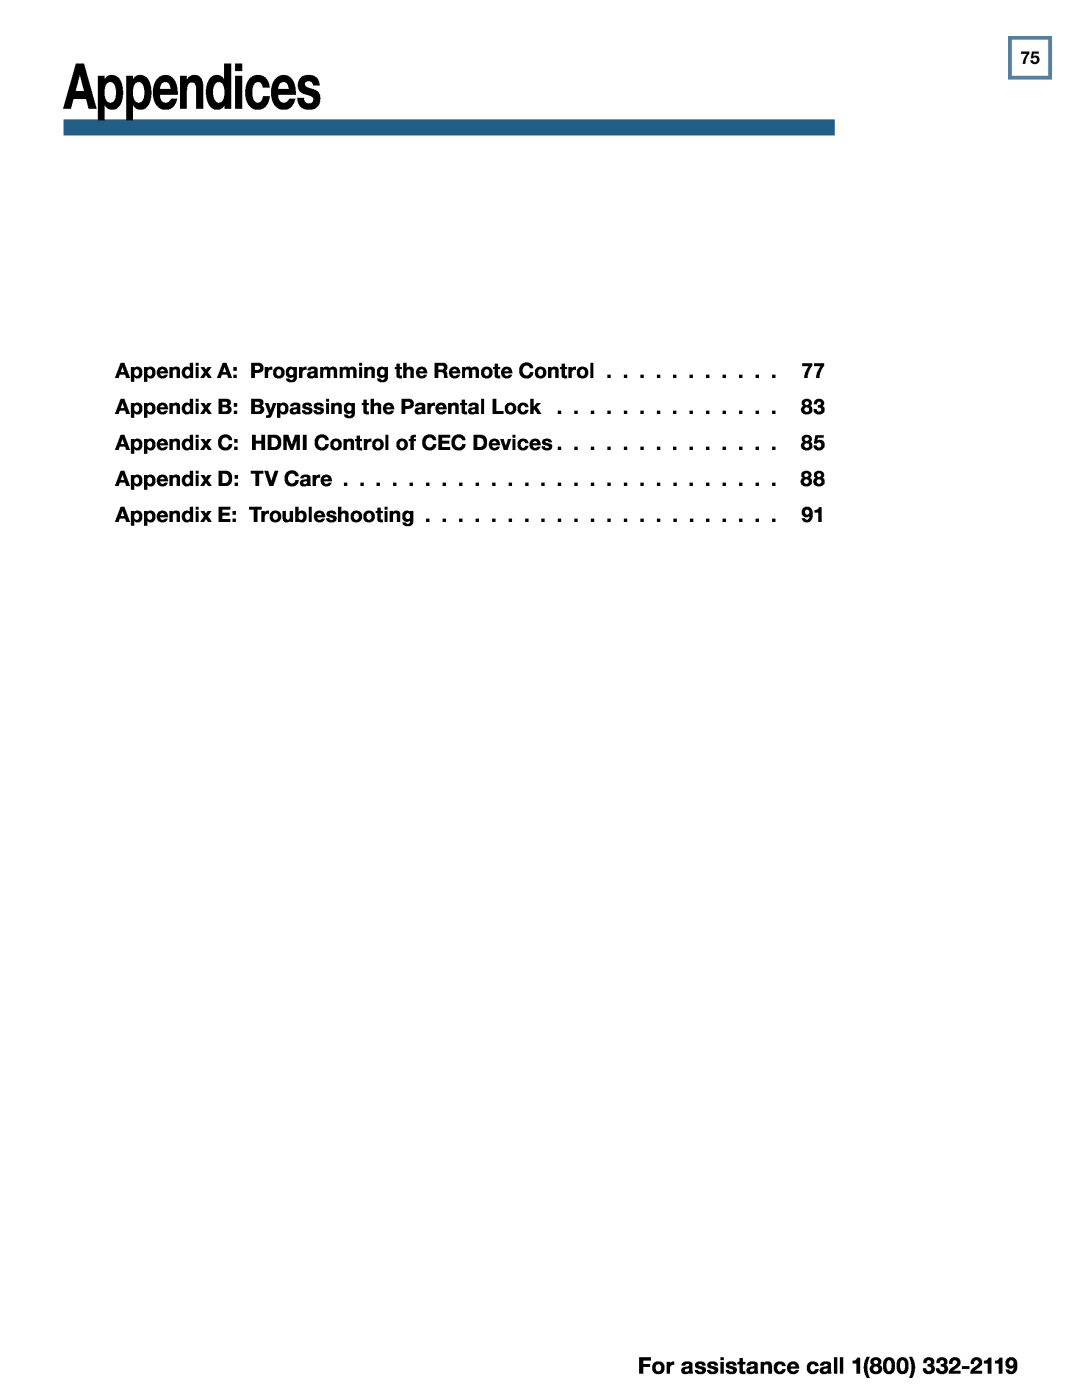 Mitsubishi Electronics 838 SERIES manual Appendices, Appendix A Programming the Remote Control, Appendix E Troubleshooting 